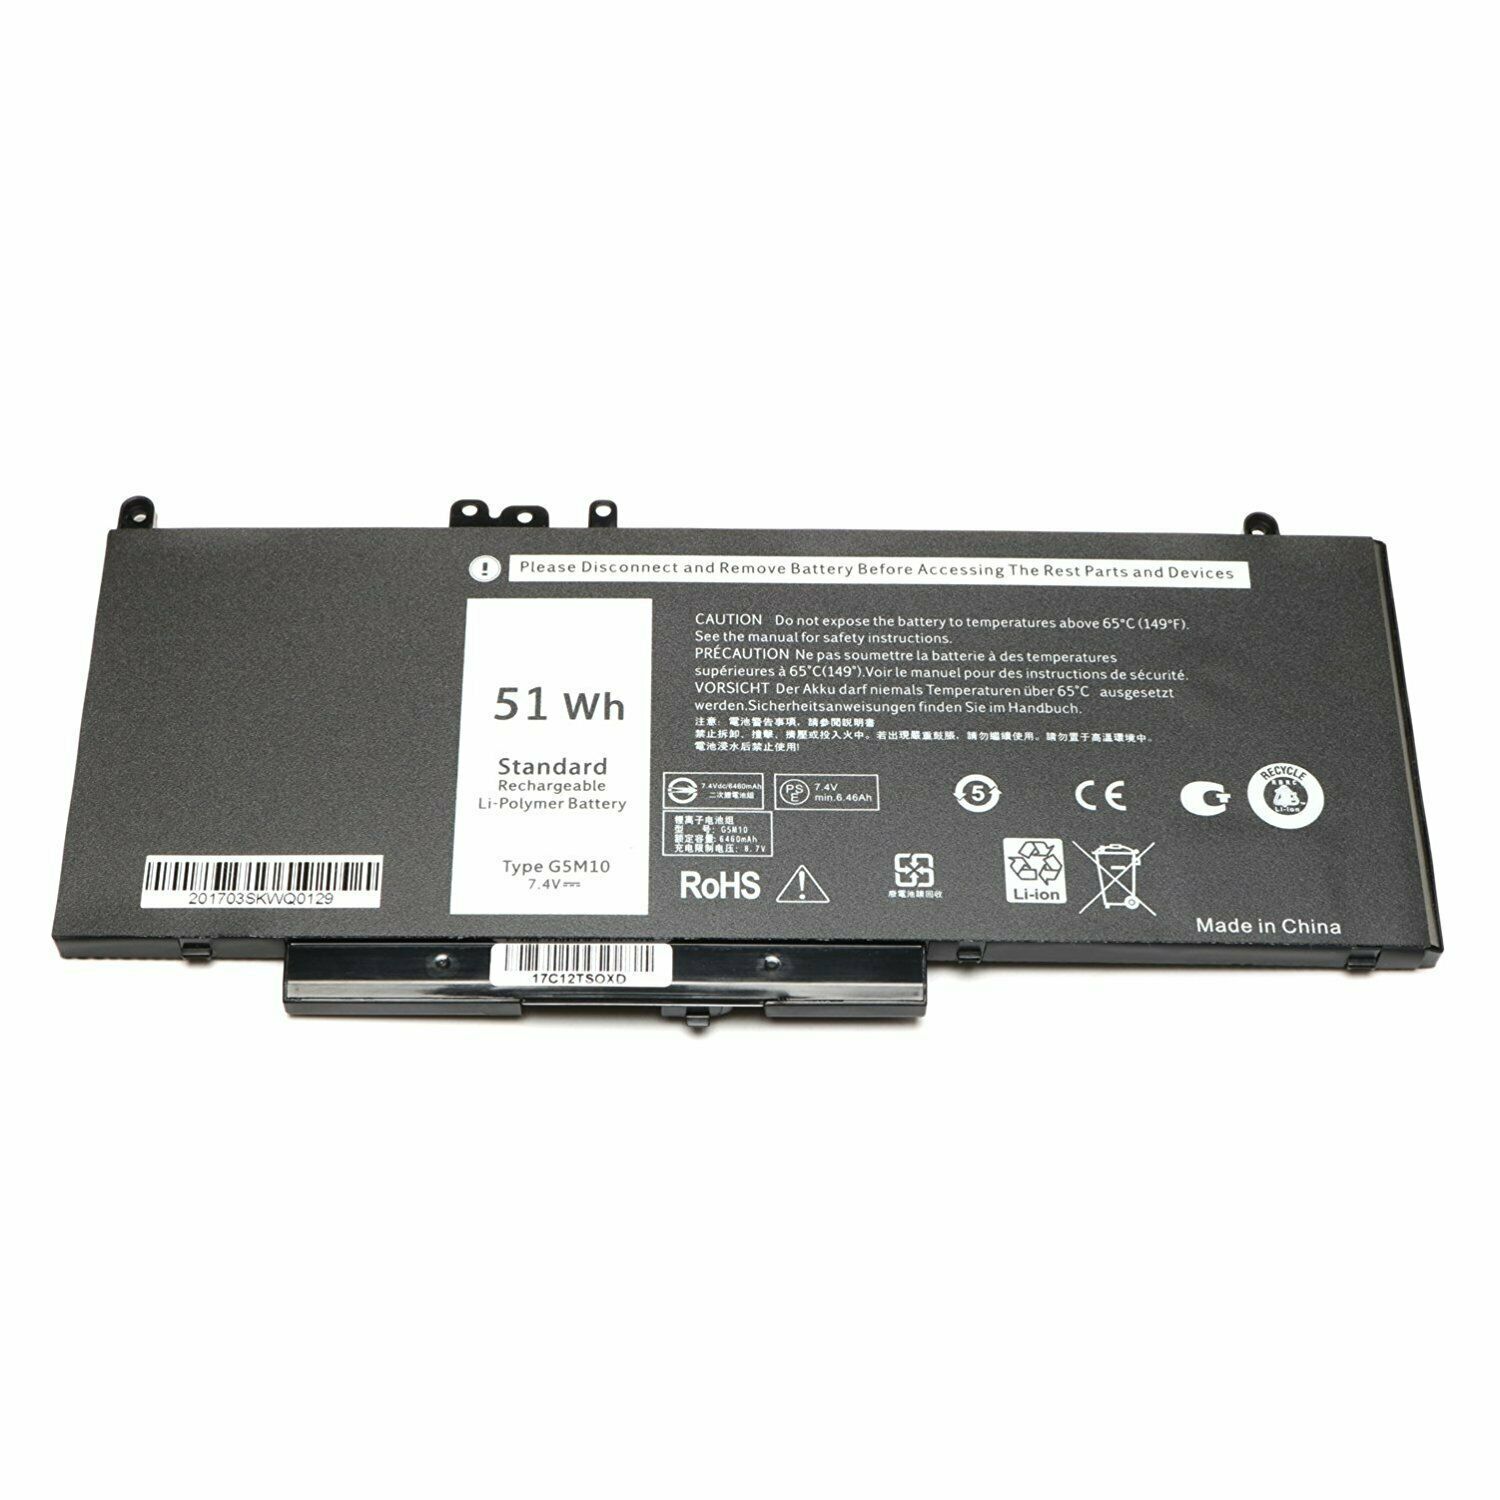 51Wh G5M10 Dell Latitude E5250 E5270 E5450 E5550 WYJC2 8V5GX F5WW5 compatible battery